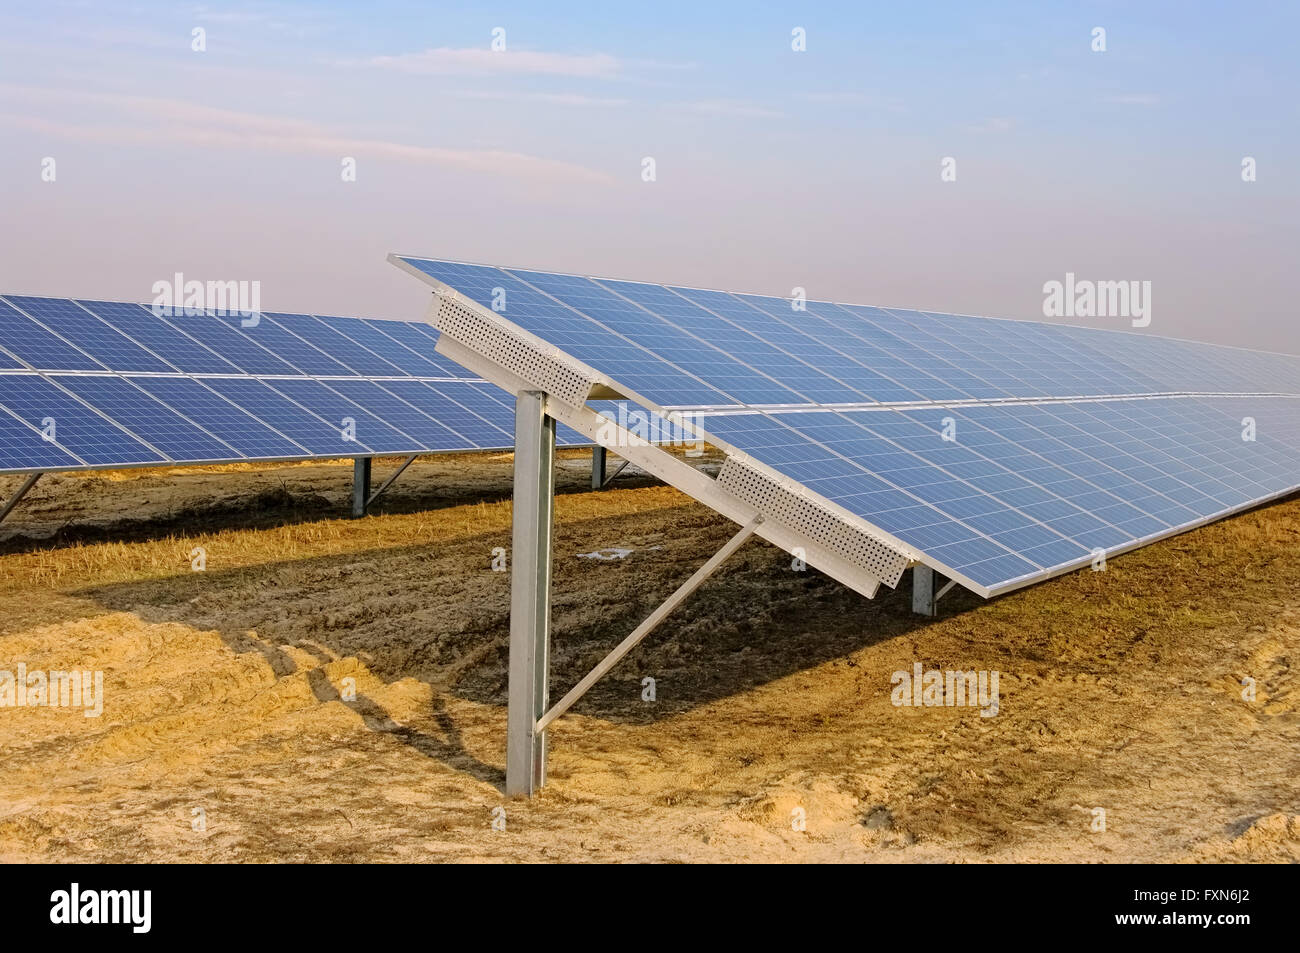 Solaranlage auf Feld - solar plant on field 08 Stock Photo